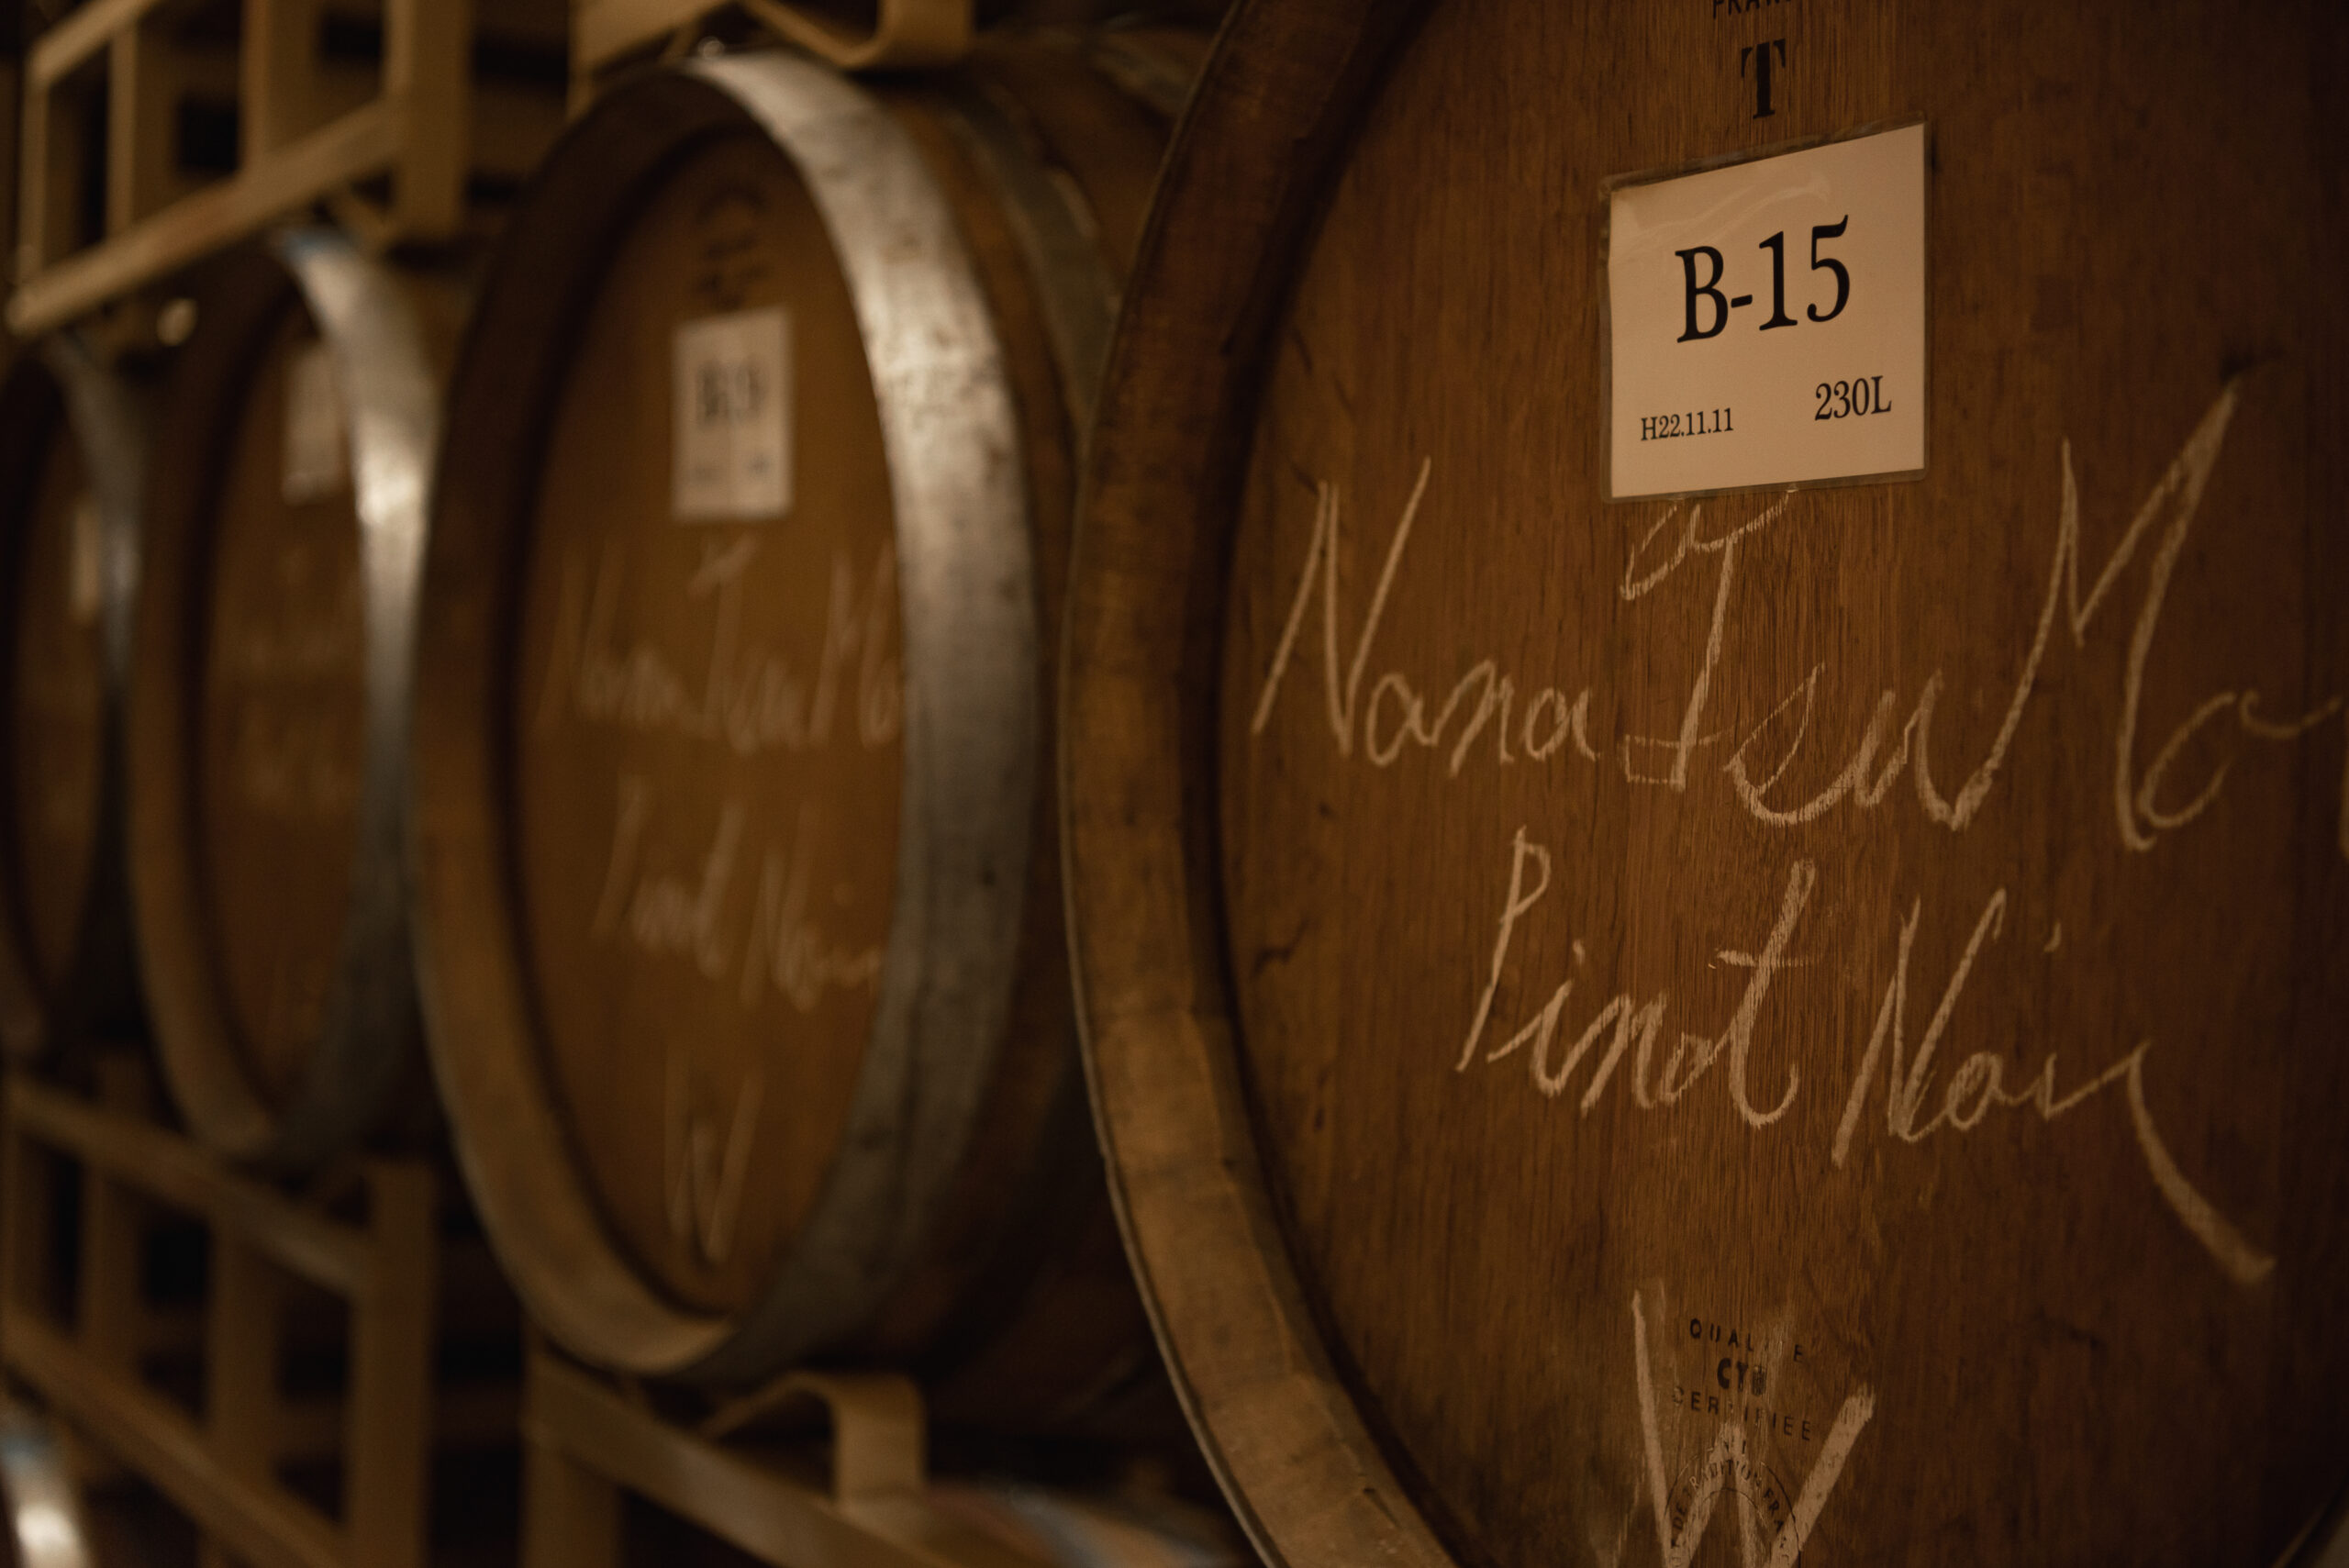 Mongaku Valley Winery’s wine cellar is minimalistic, focusing primarily on hygiene.  The wine barrels of Domaine Takahiko. 